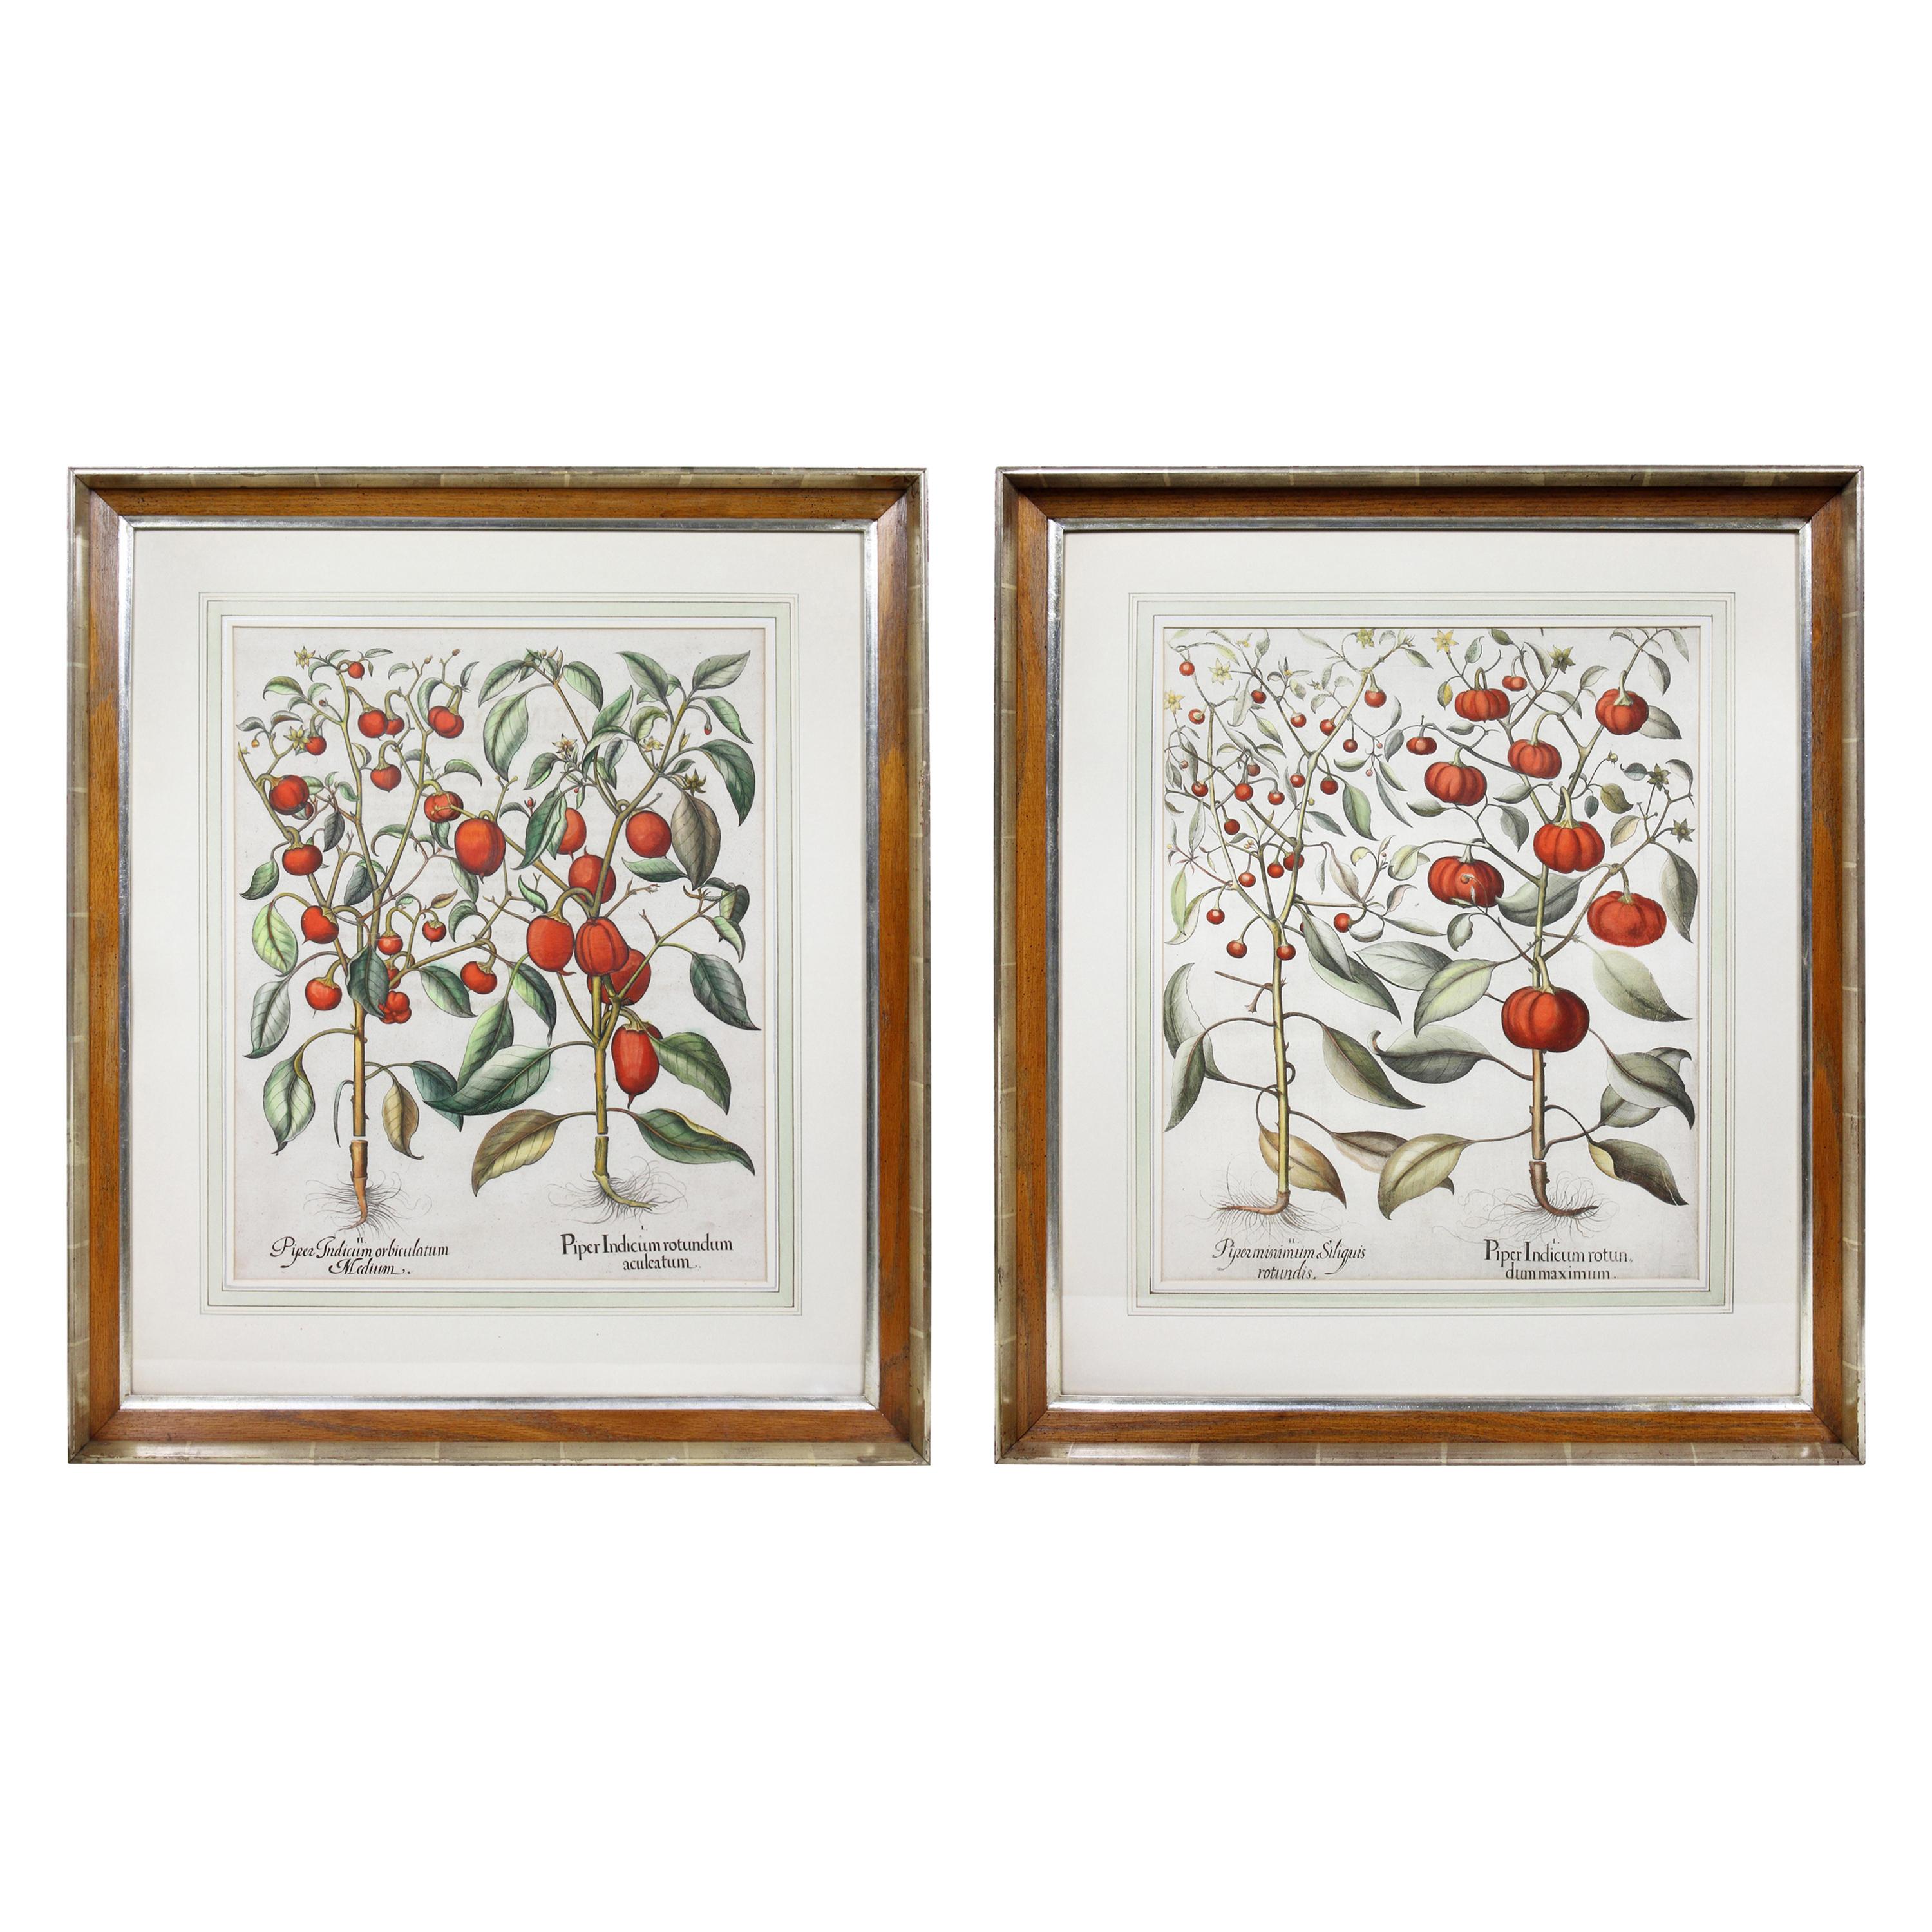 Pair of Botanical Engravings of Tomatoes by Basilius Besler